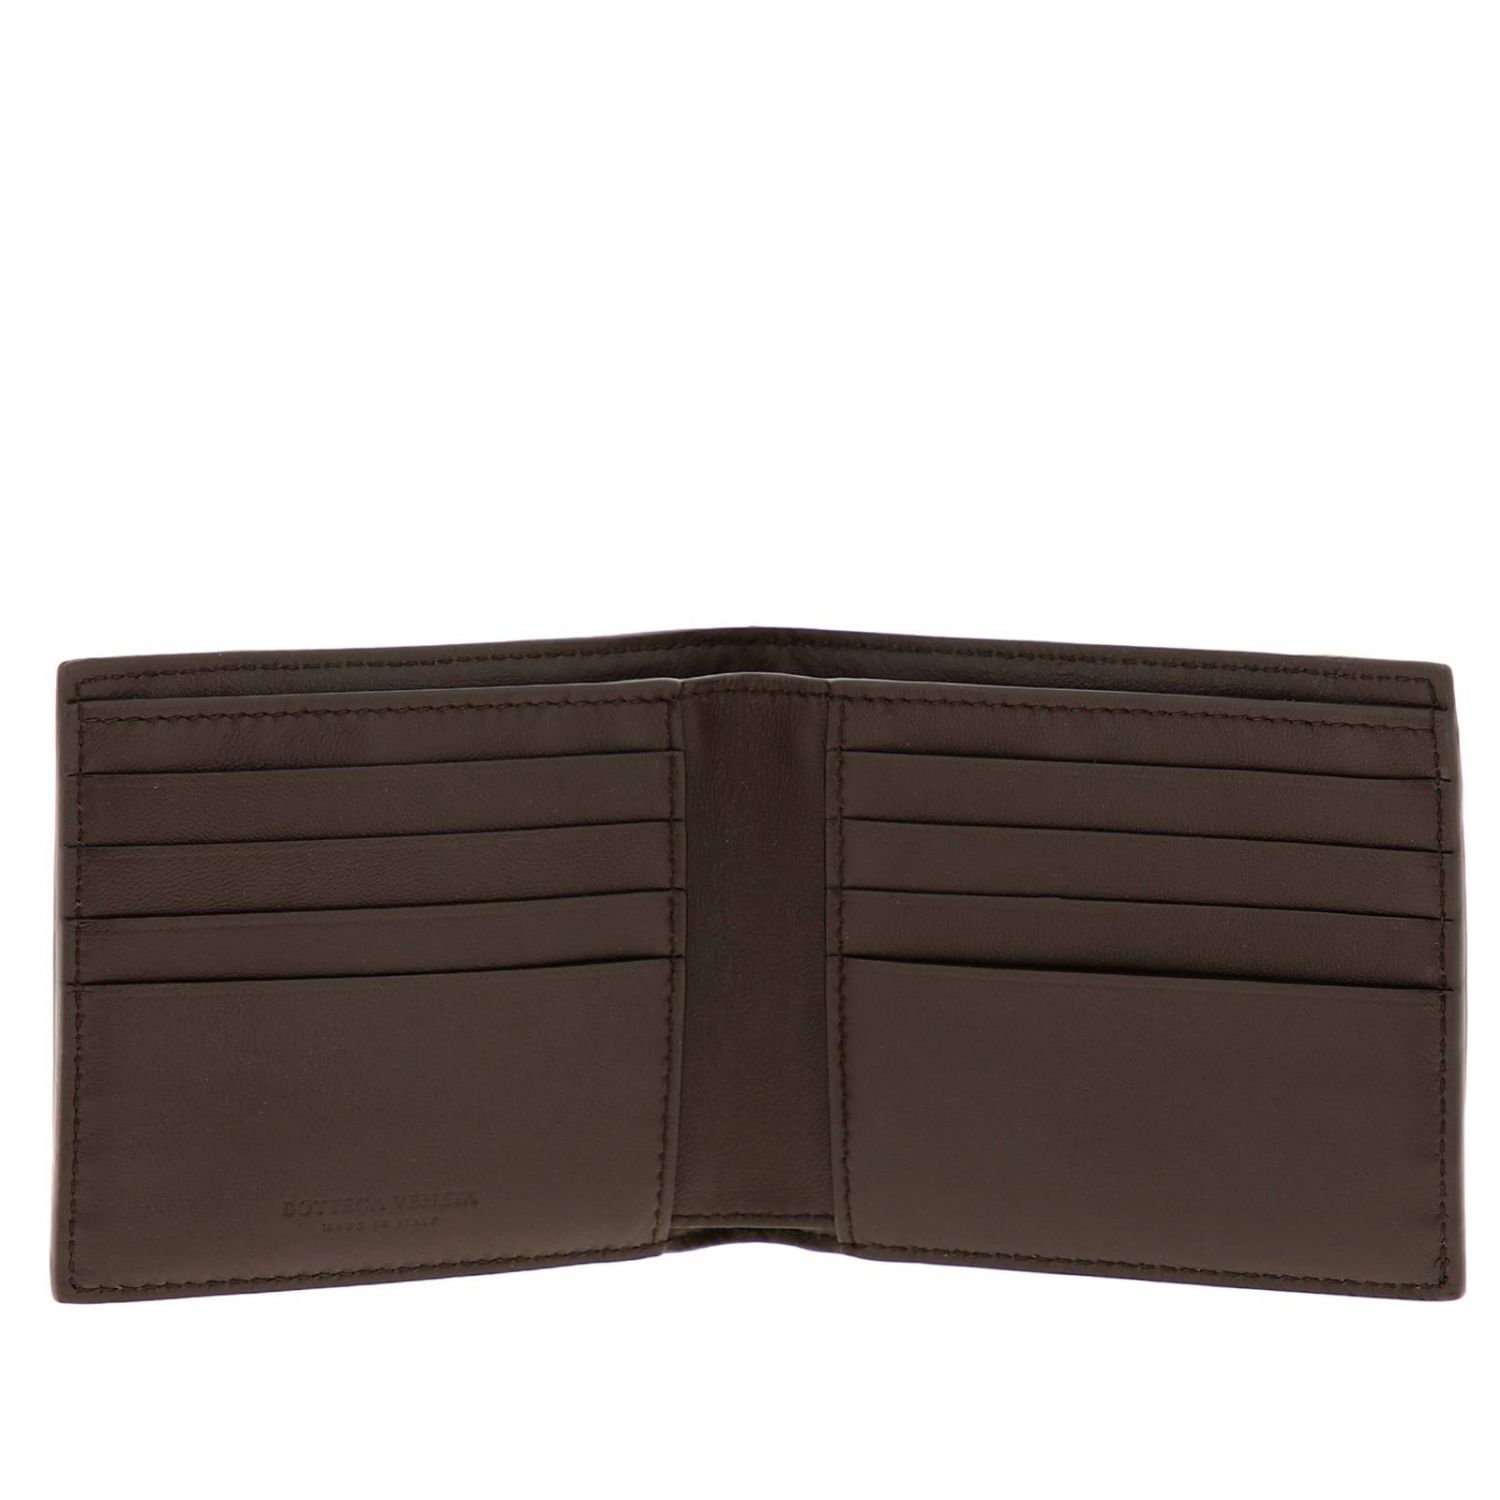 BOTTEGA VENETA: Classic woven leather wallet - Brown | Bottega Veneta ...